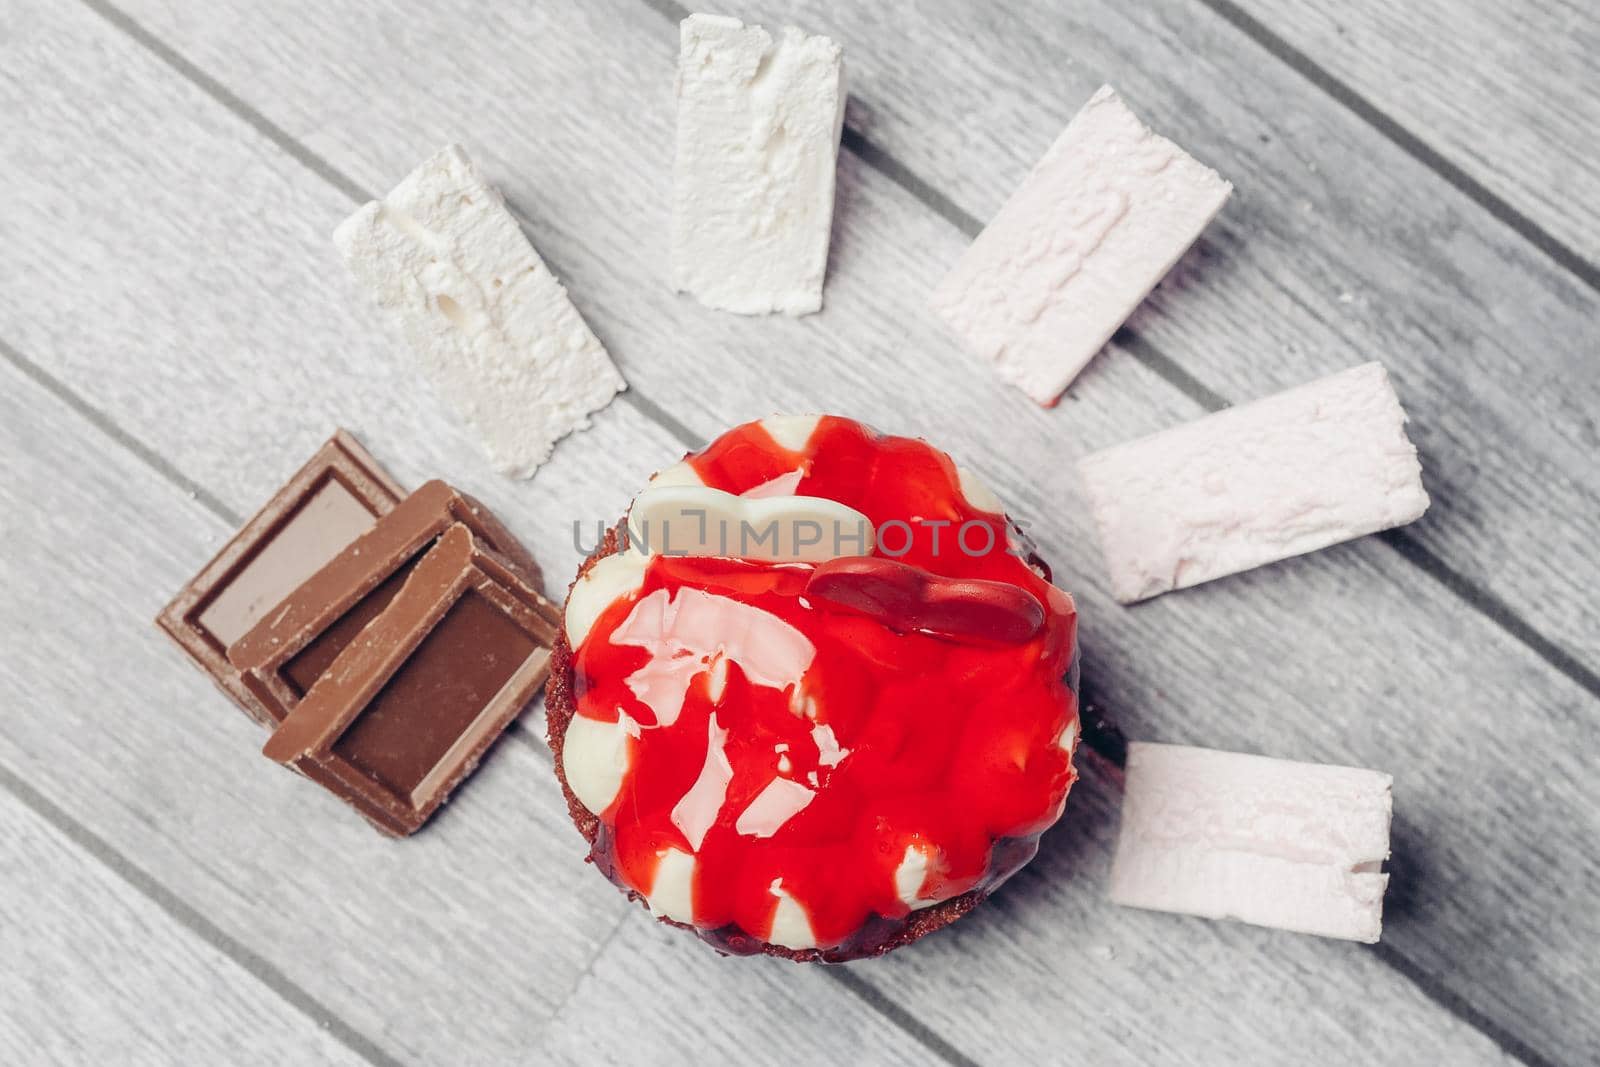 cake red velvet sweets dessert discrepancies snack for tea by SHOTPRIME